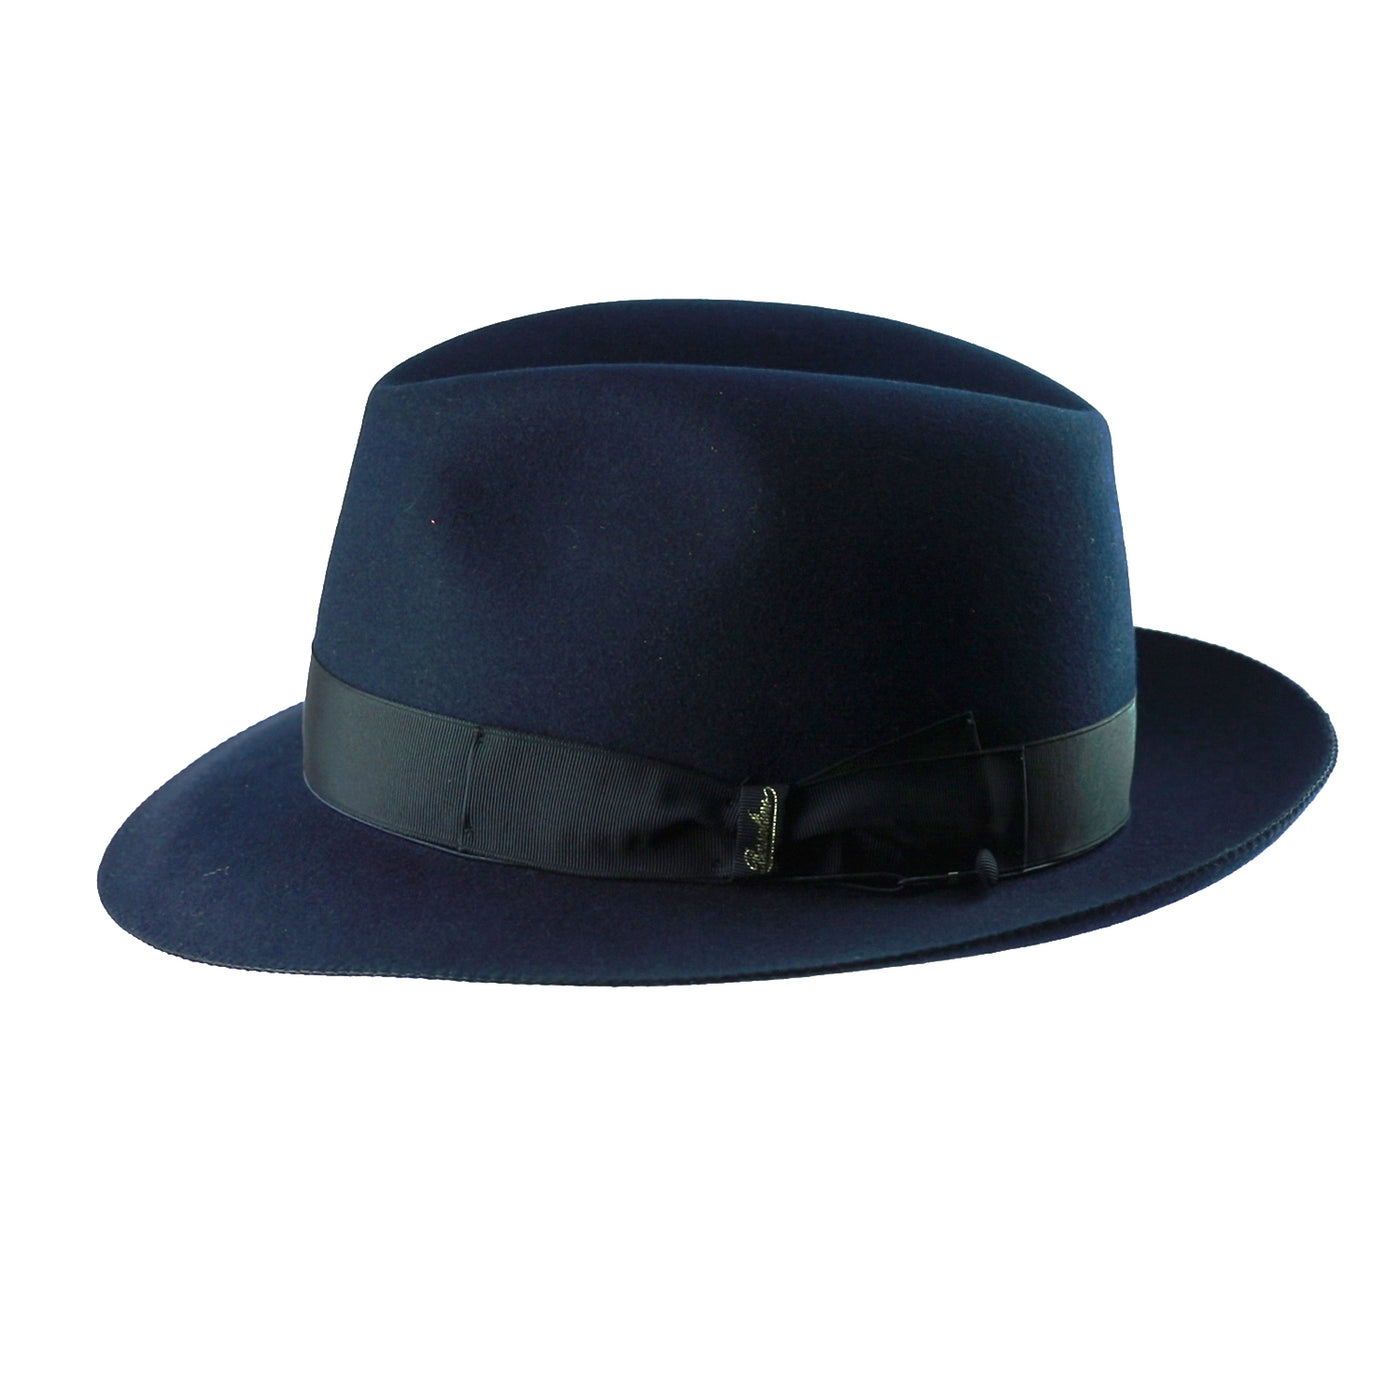 Astuccio 238 - Royal Blue, product_type] - Borsalino for Atica fedora hat